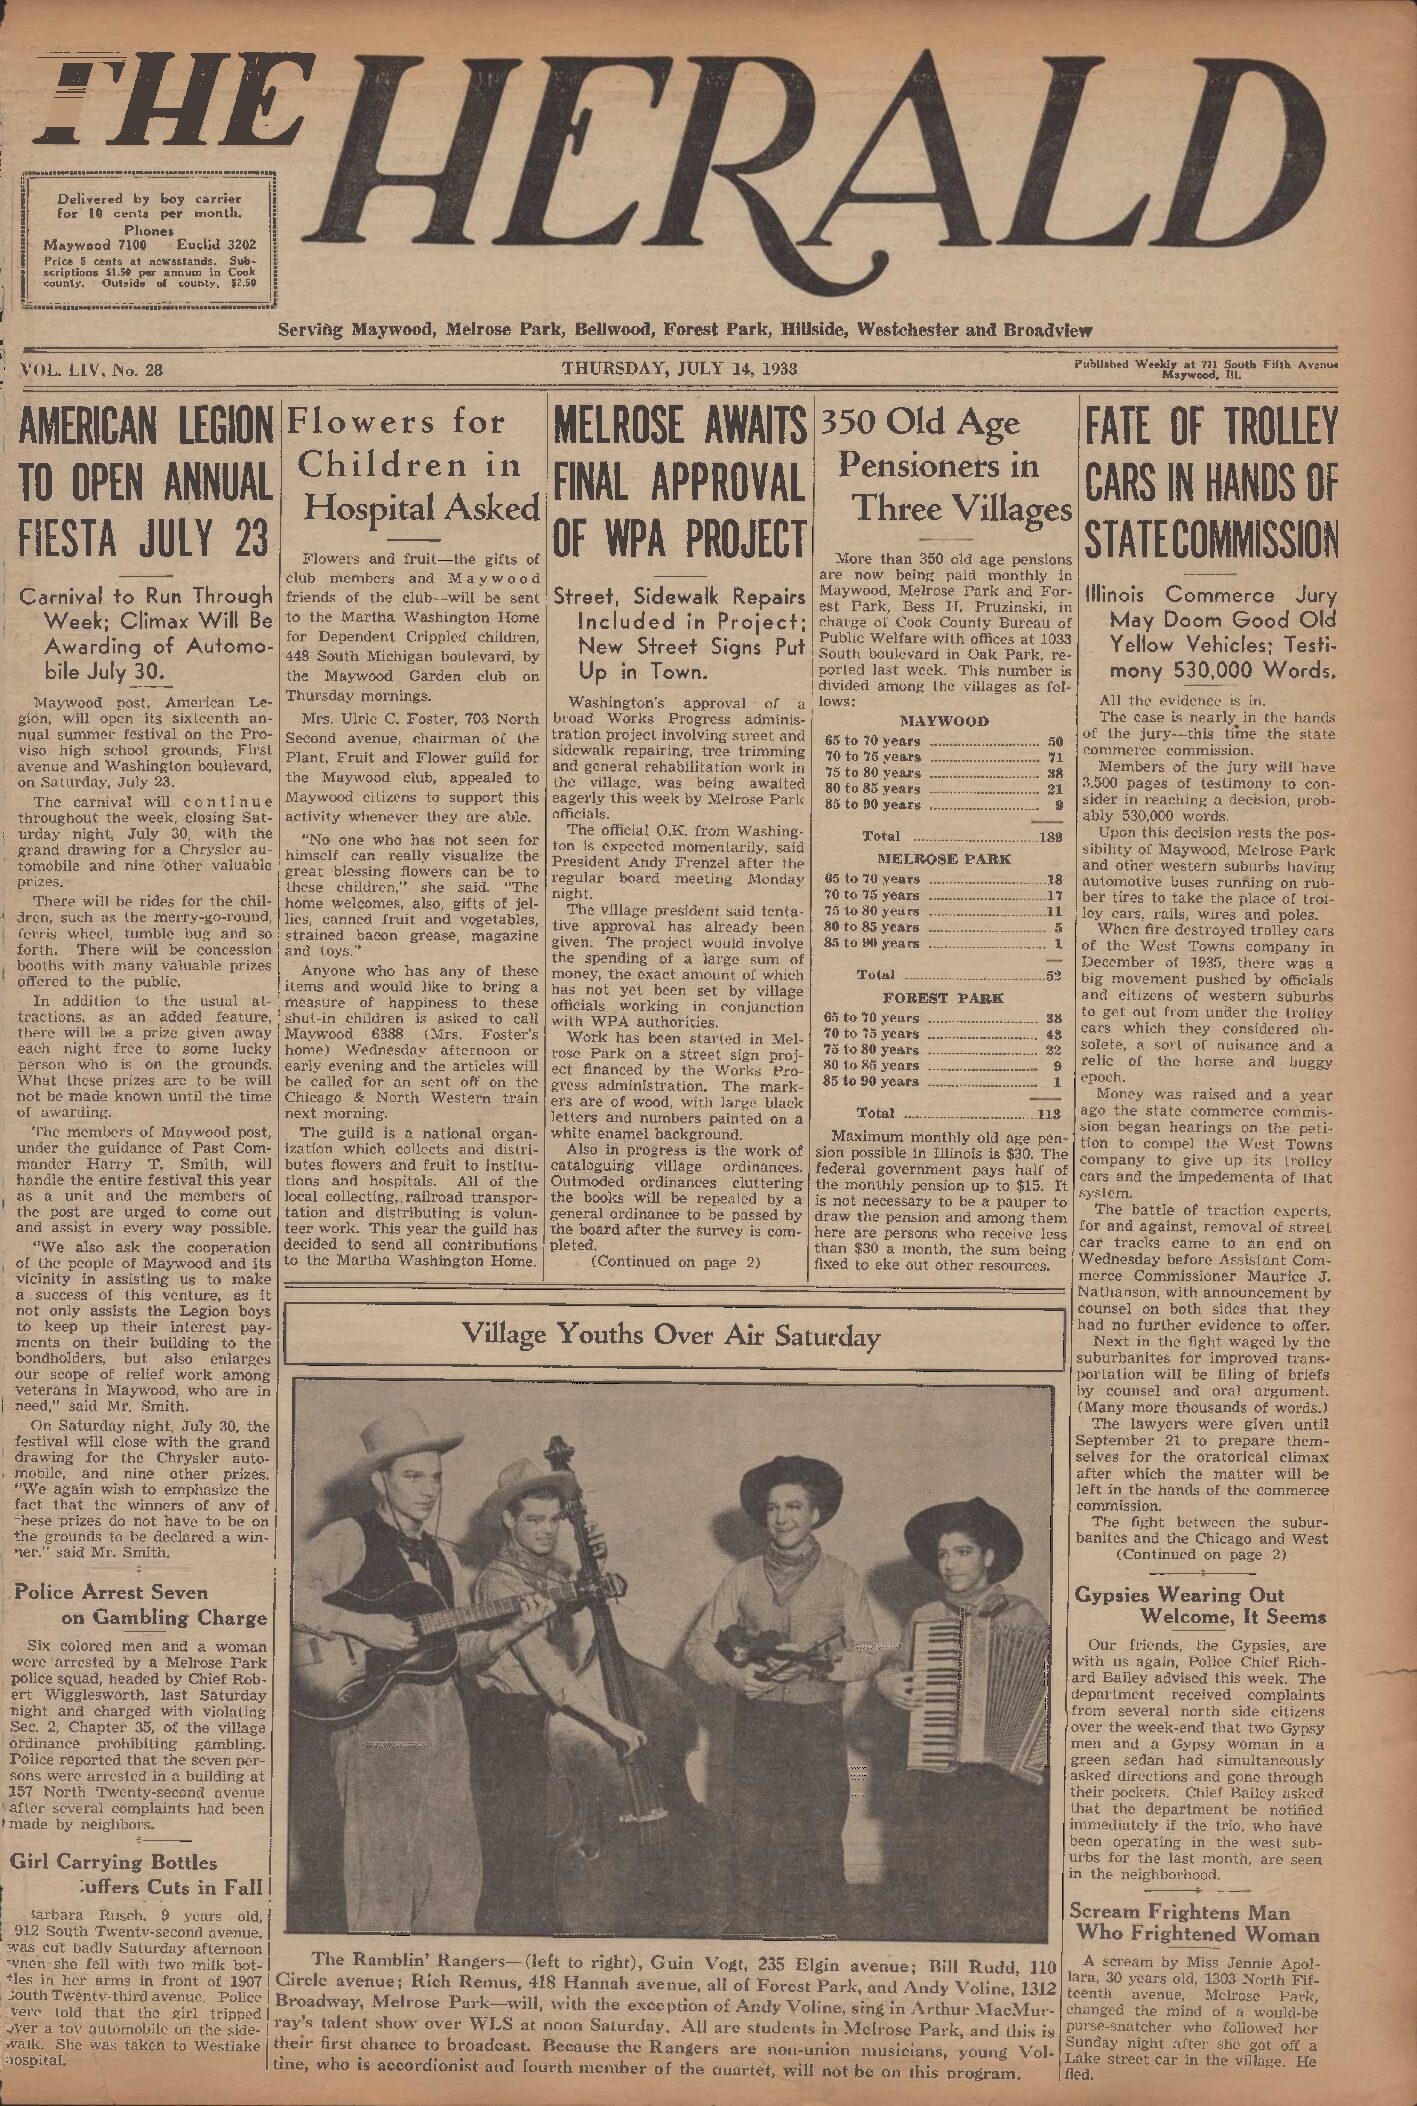 The Herald – 19380714